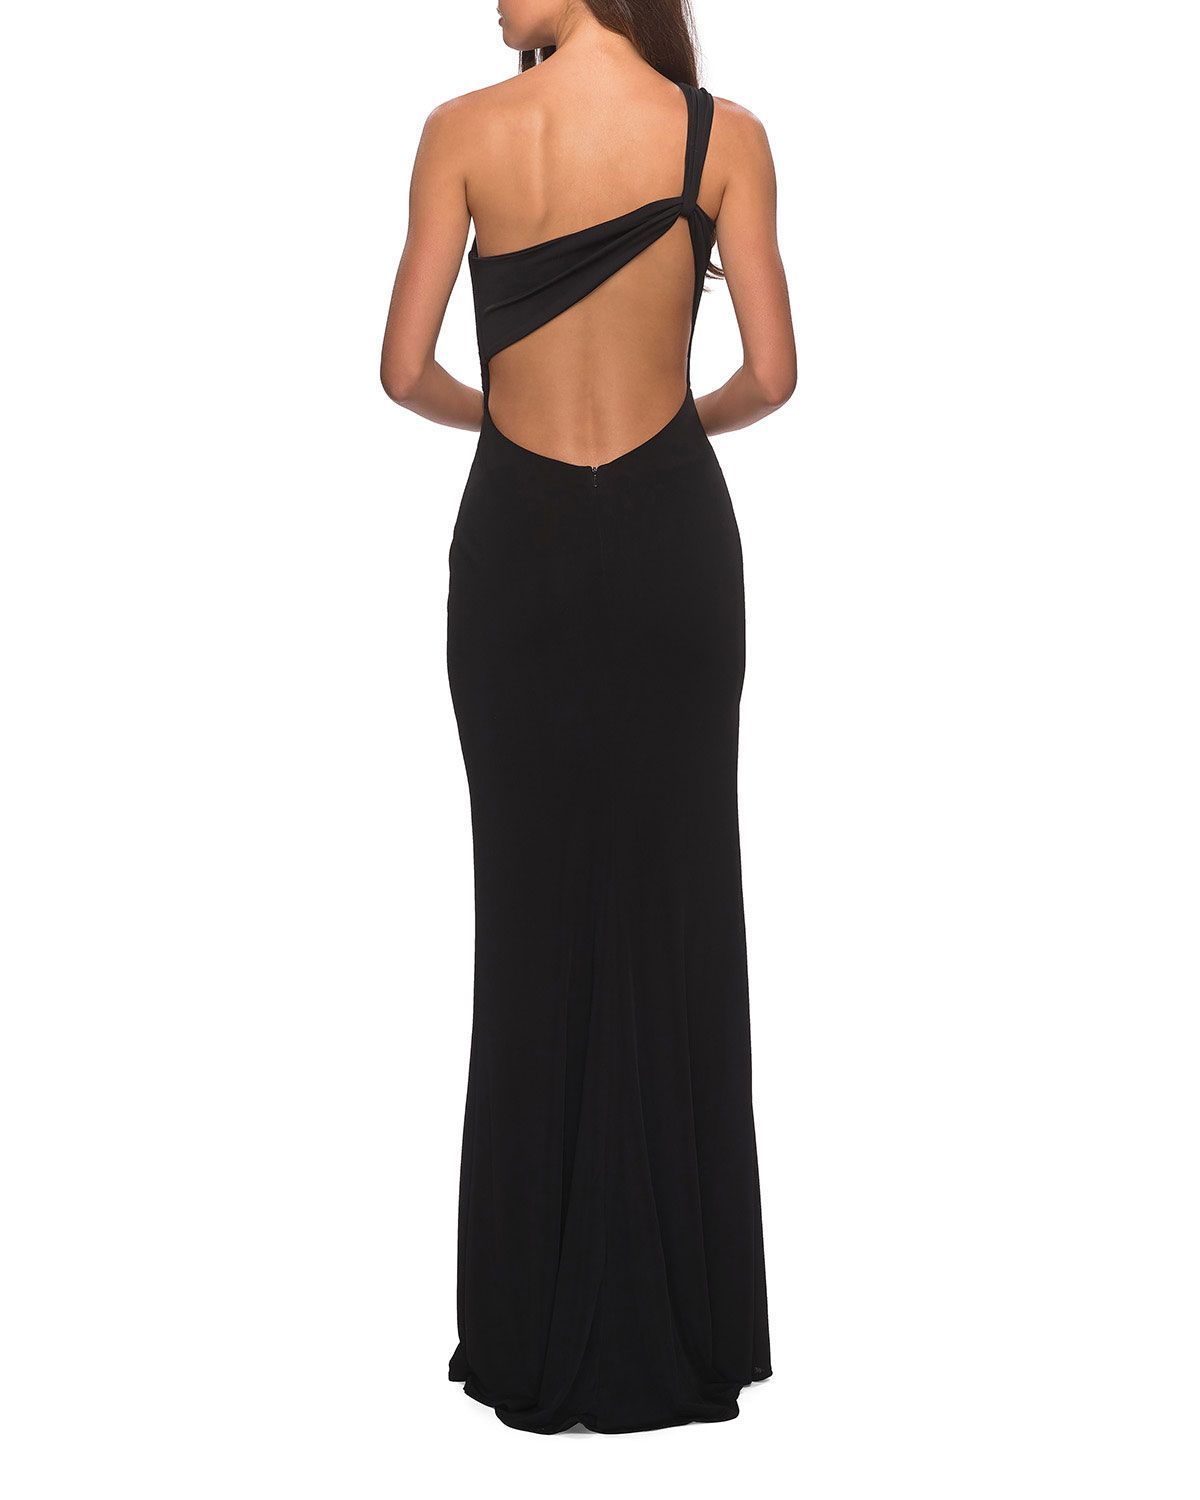 La Femme One-Shoulder Ruched Open-Back Jersey Gown w/ Slit -   14 dress For Teens open backs ideas